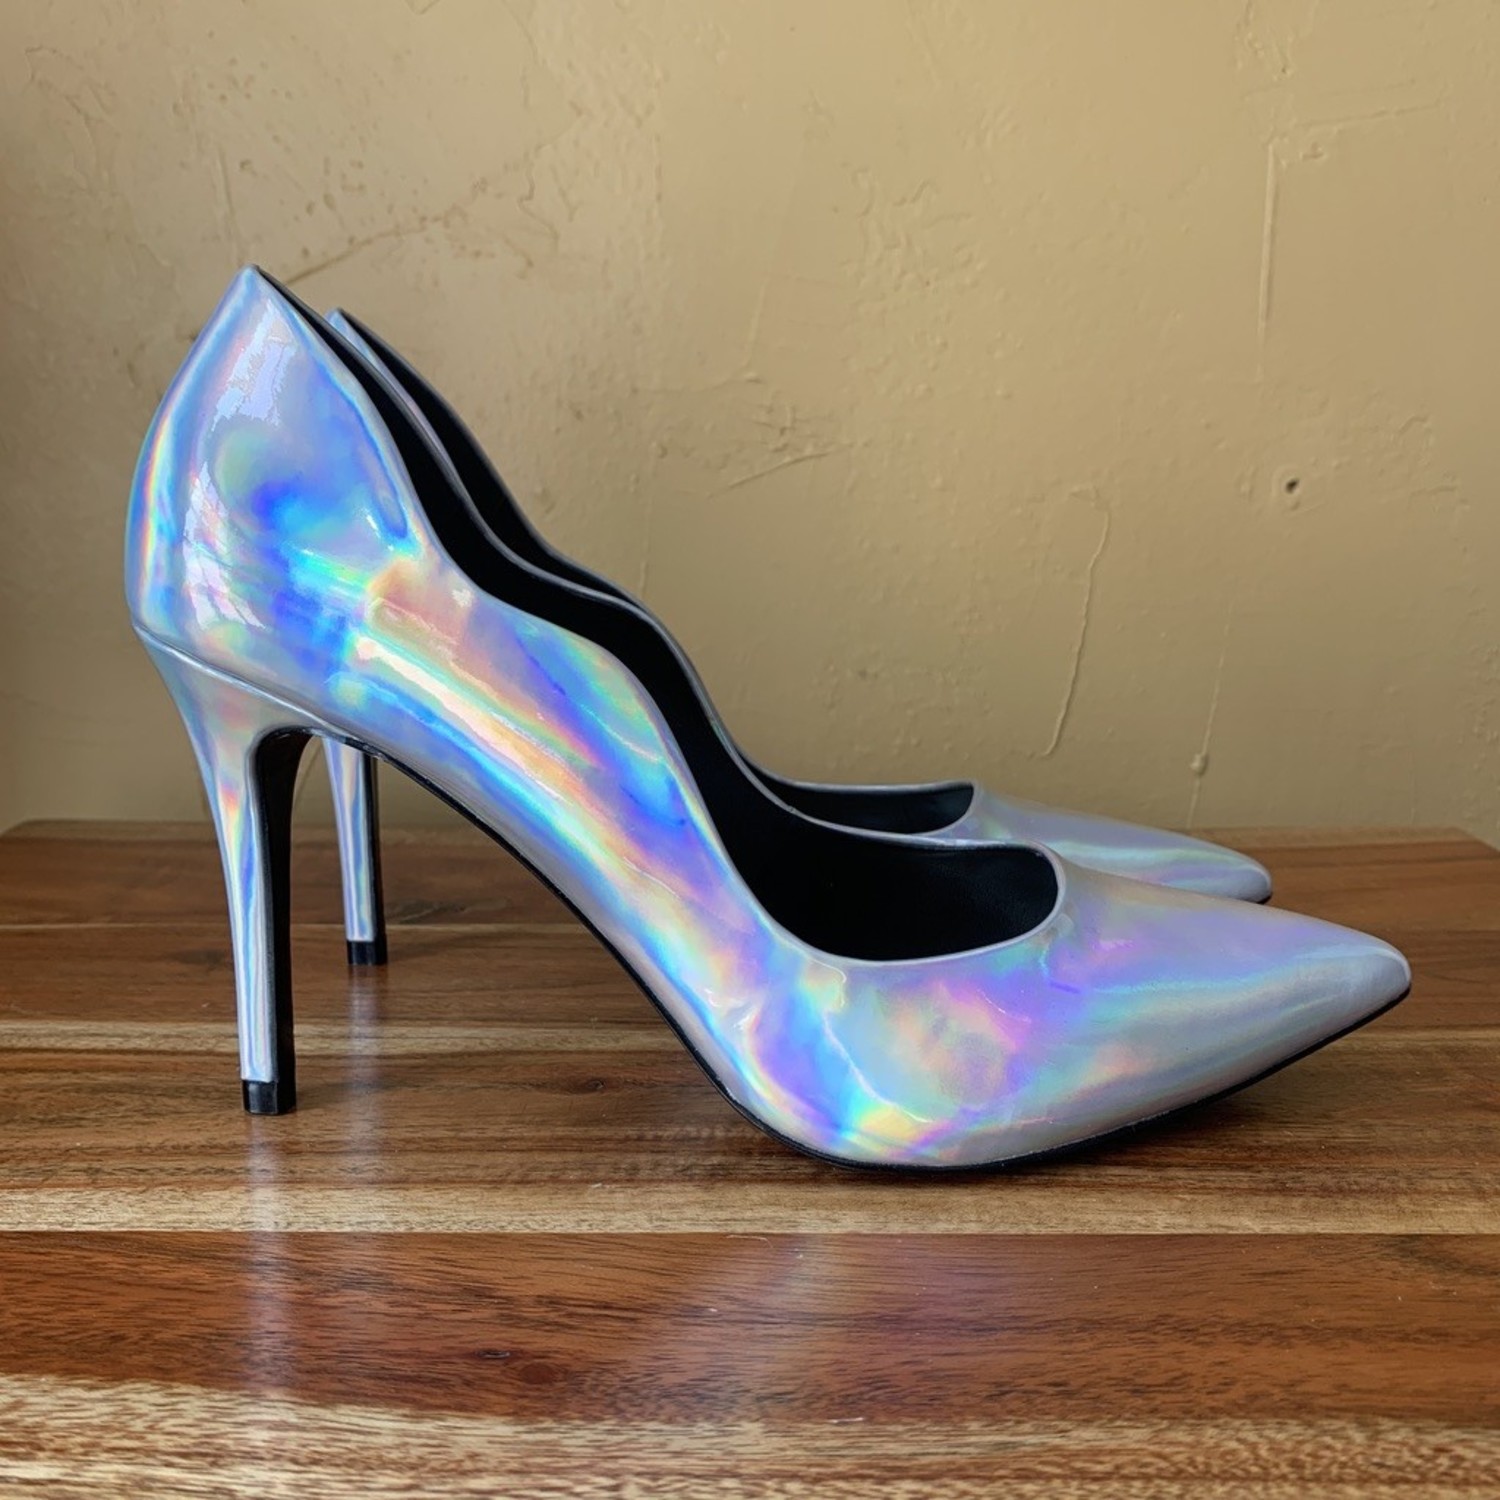 Buy Multicoloured Heeled Sandals for Women by Shoetopia Online | Ajio.com